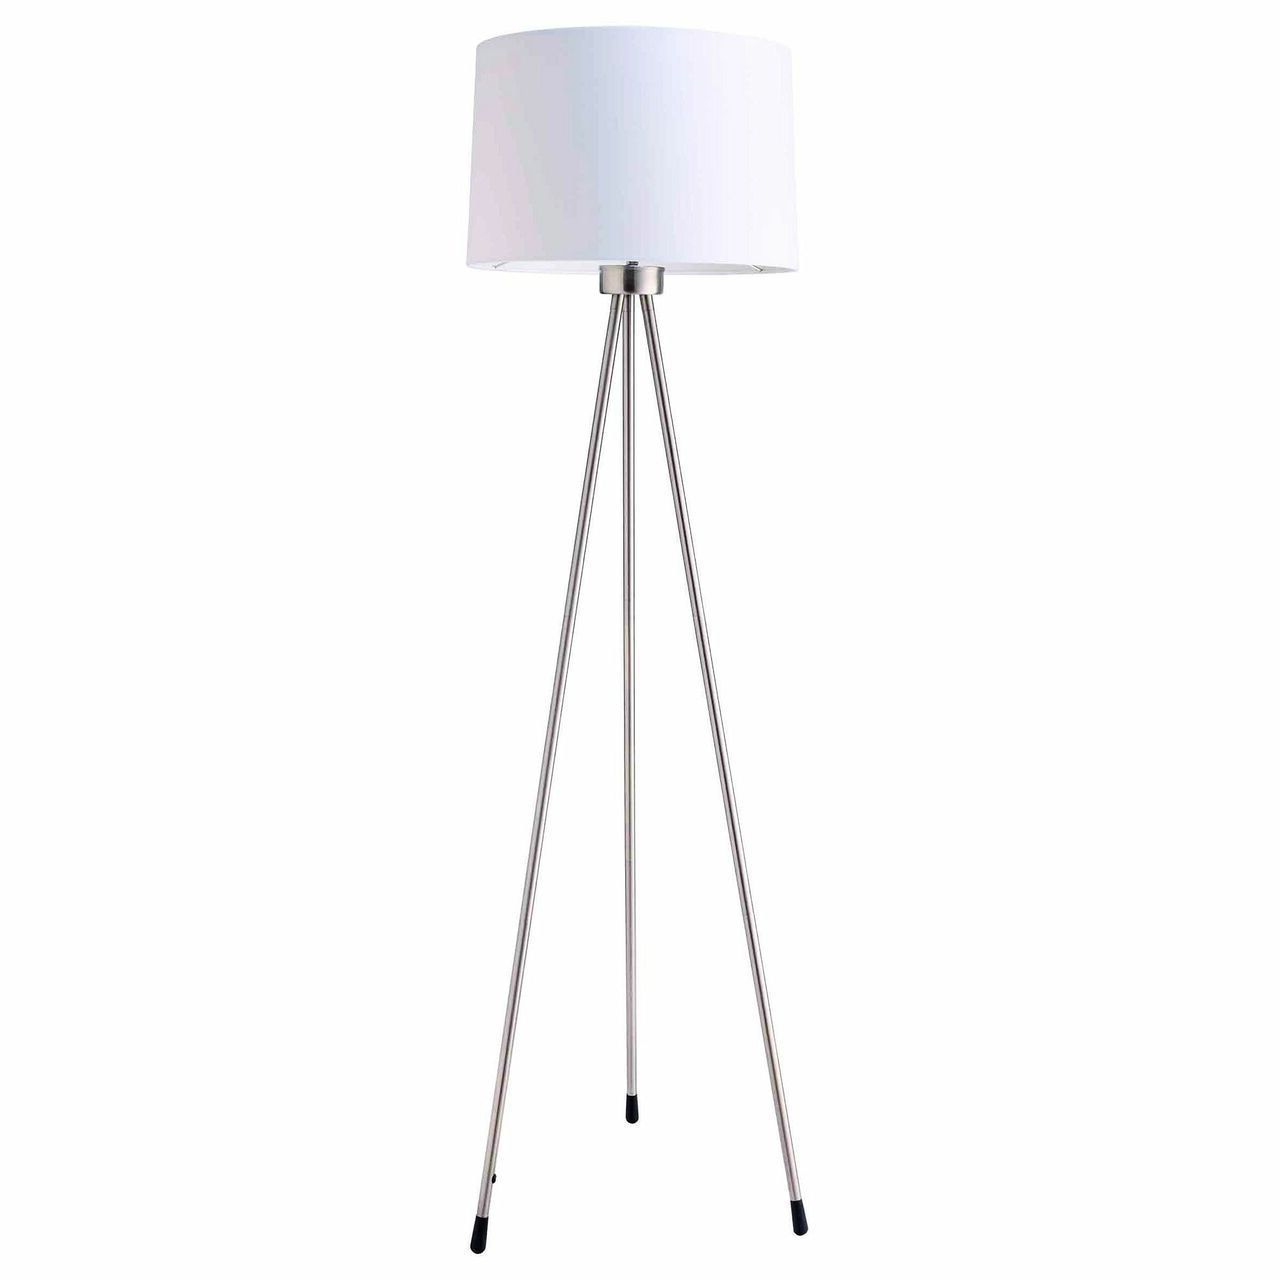 Minimalist Silver Metal Floor Lamp | Ebay Within Silver Steel Floor Lamps (View 4 of 20)